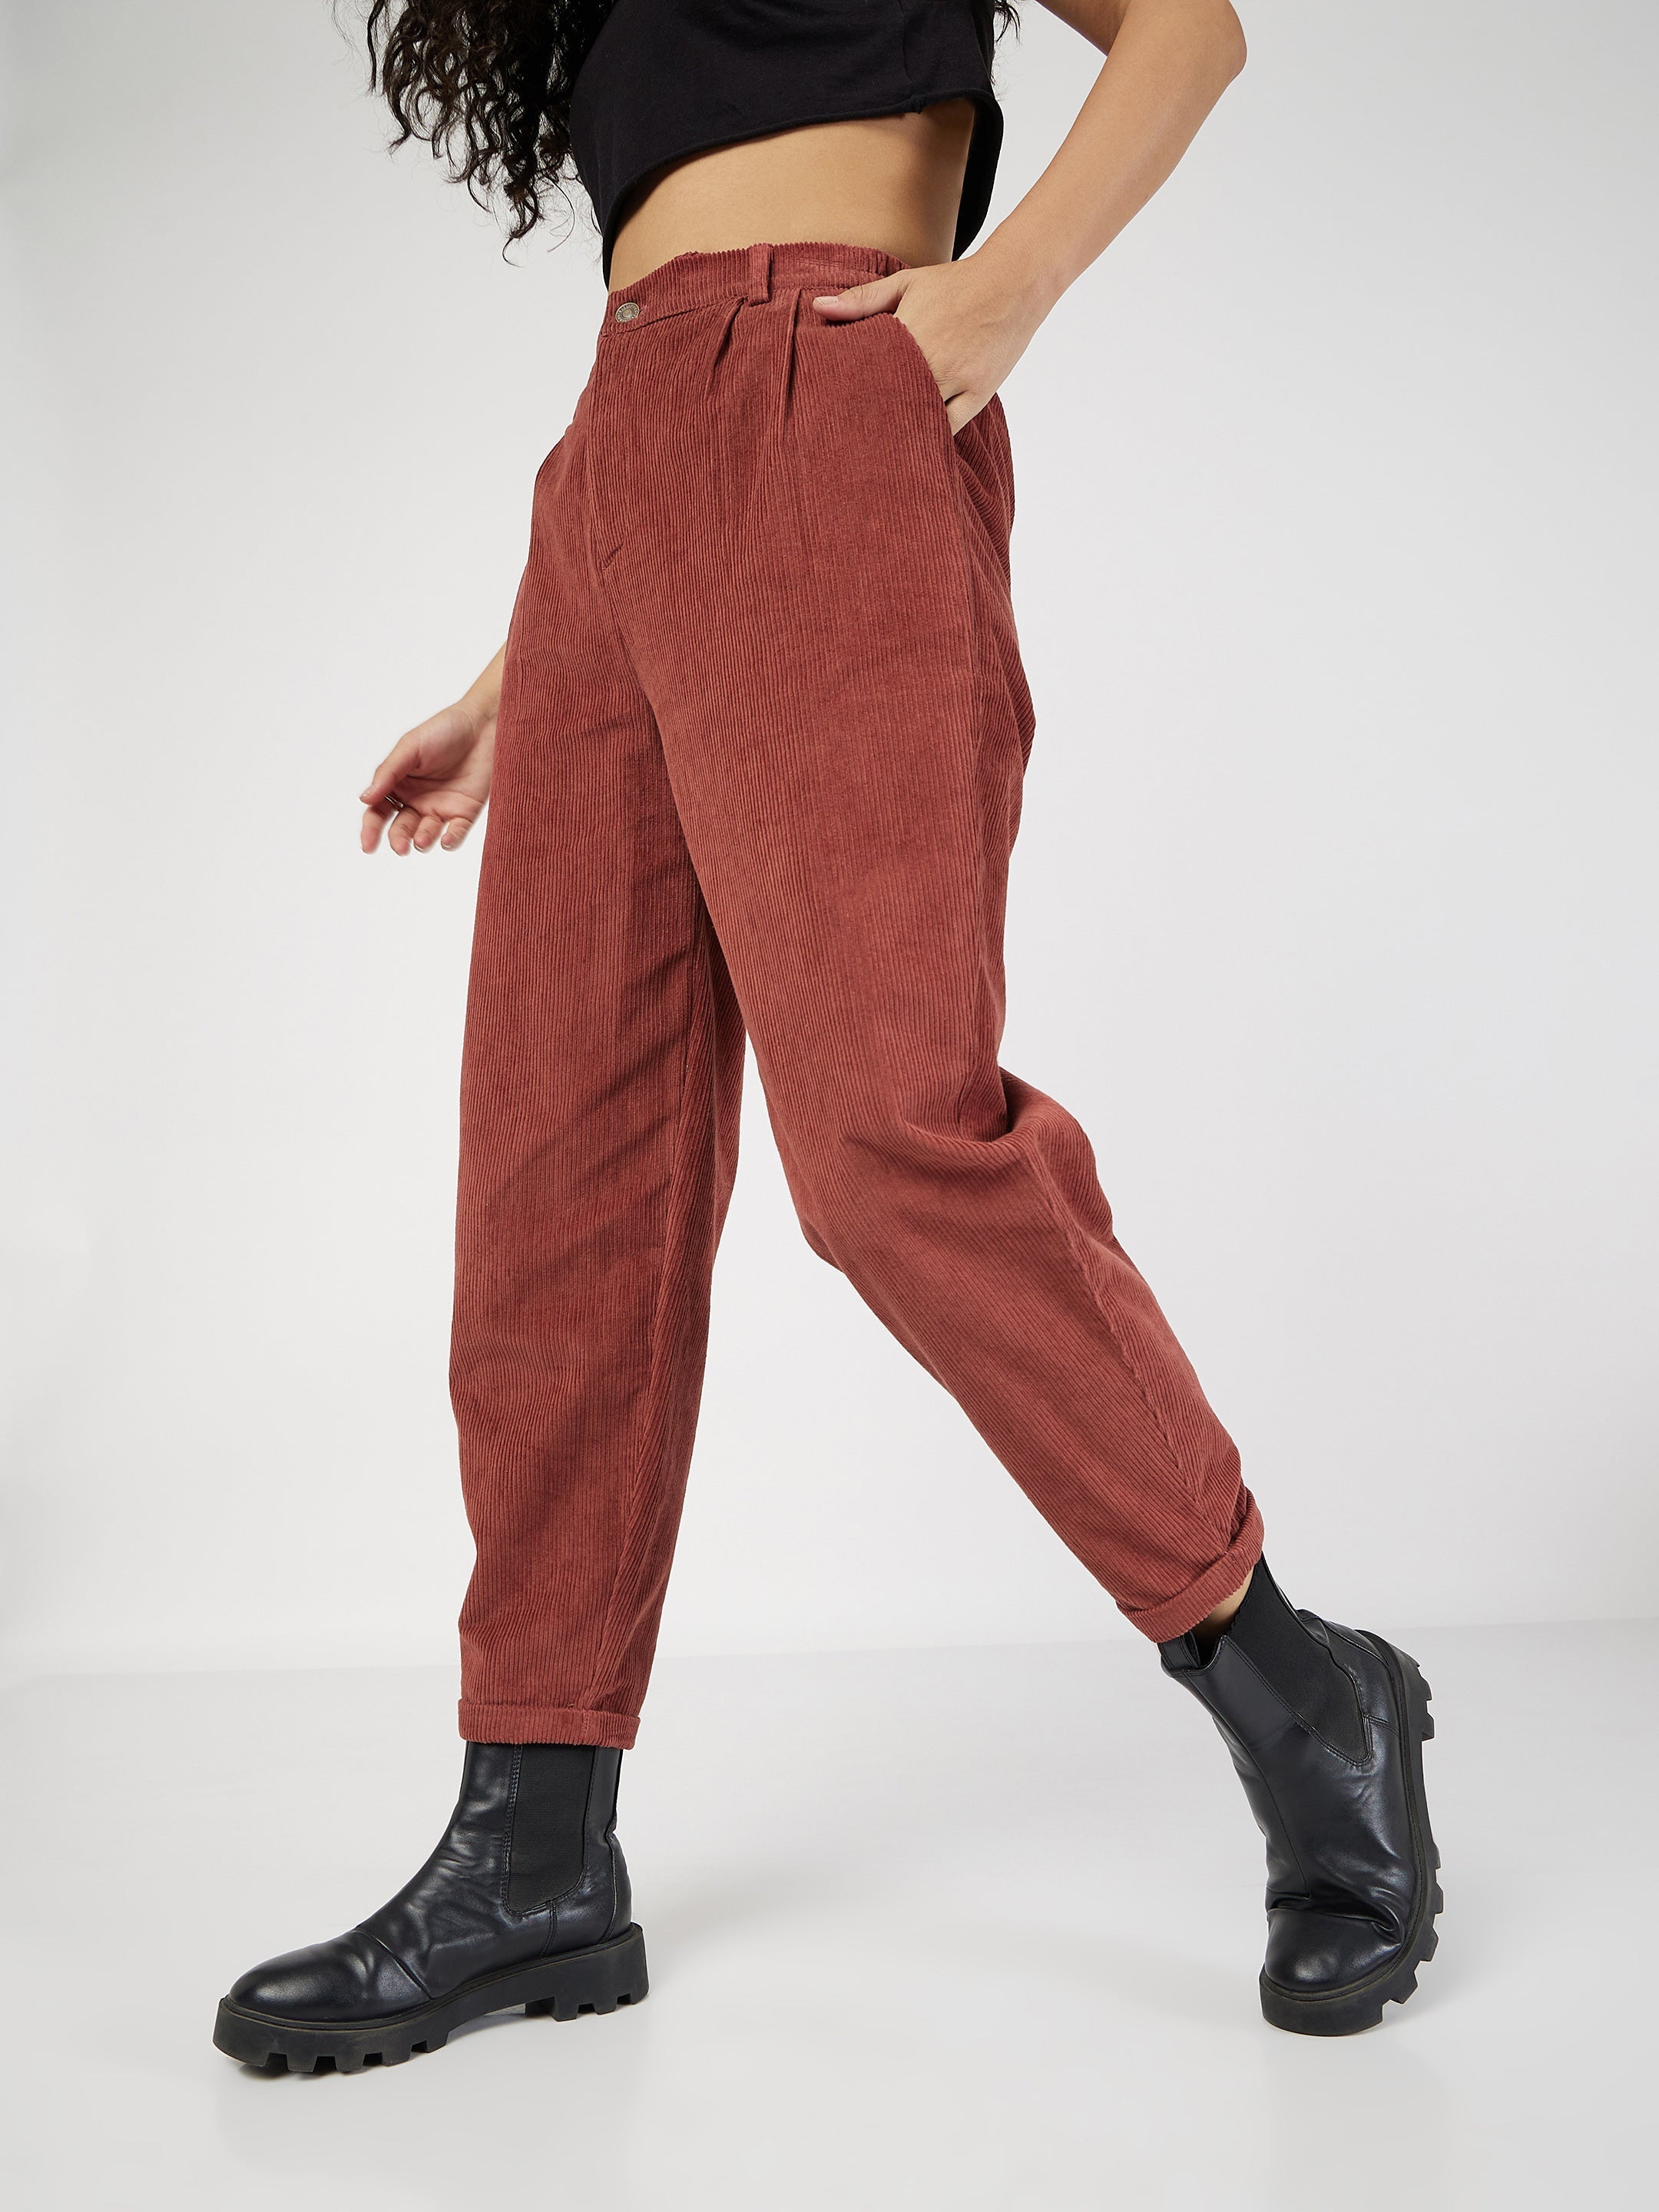 Women's Rust Corduroy Carrot Fit Pants - Lyush